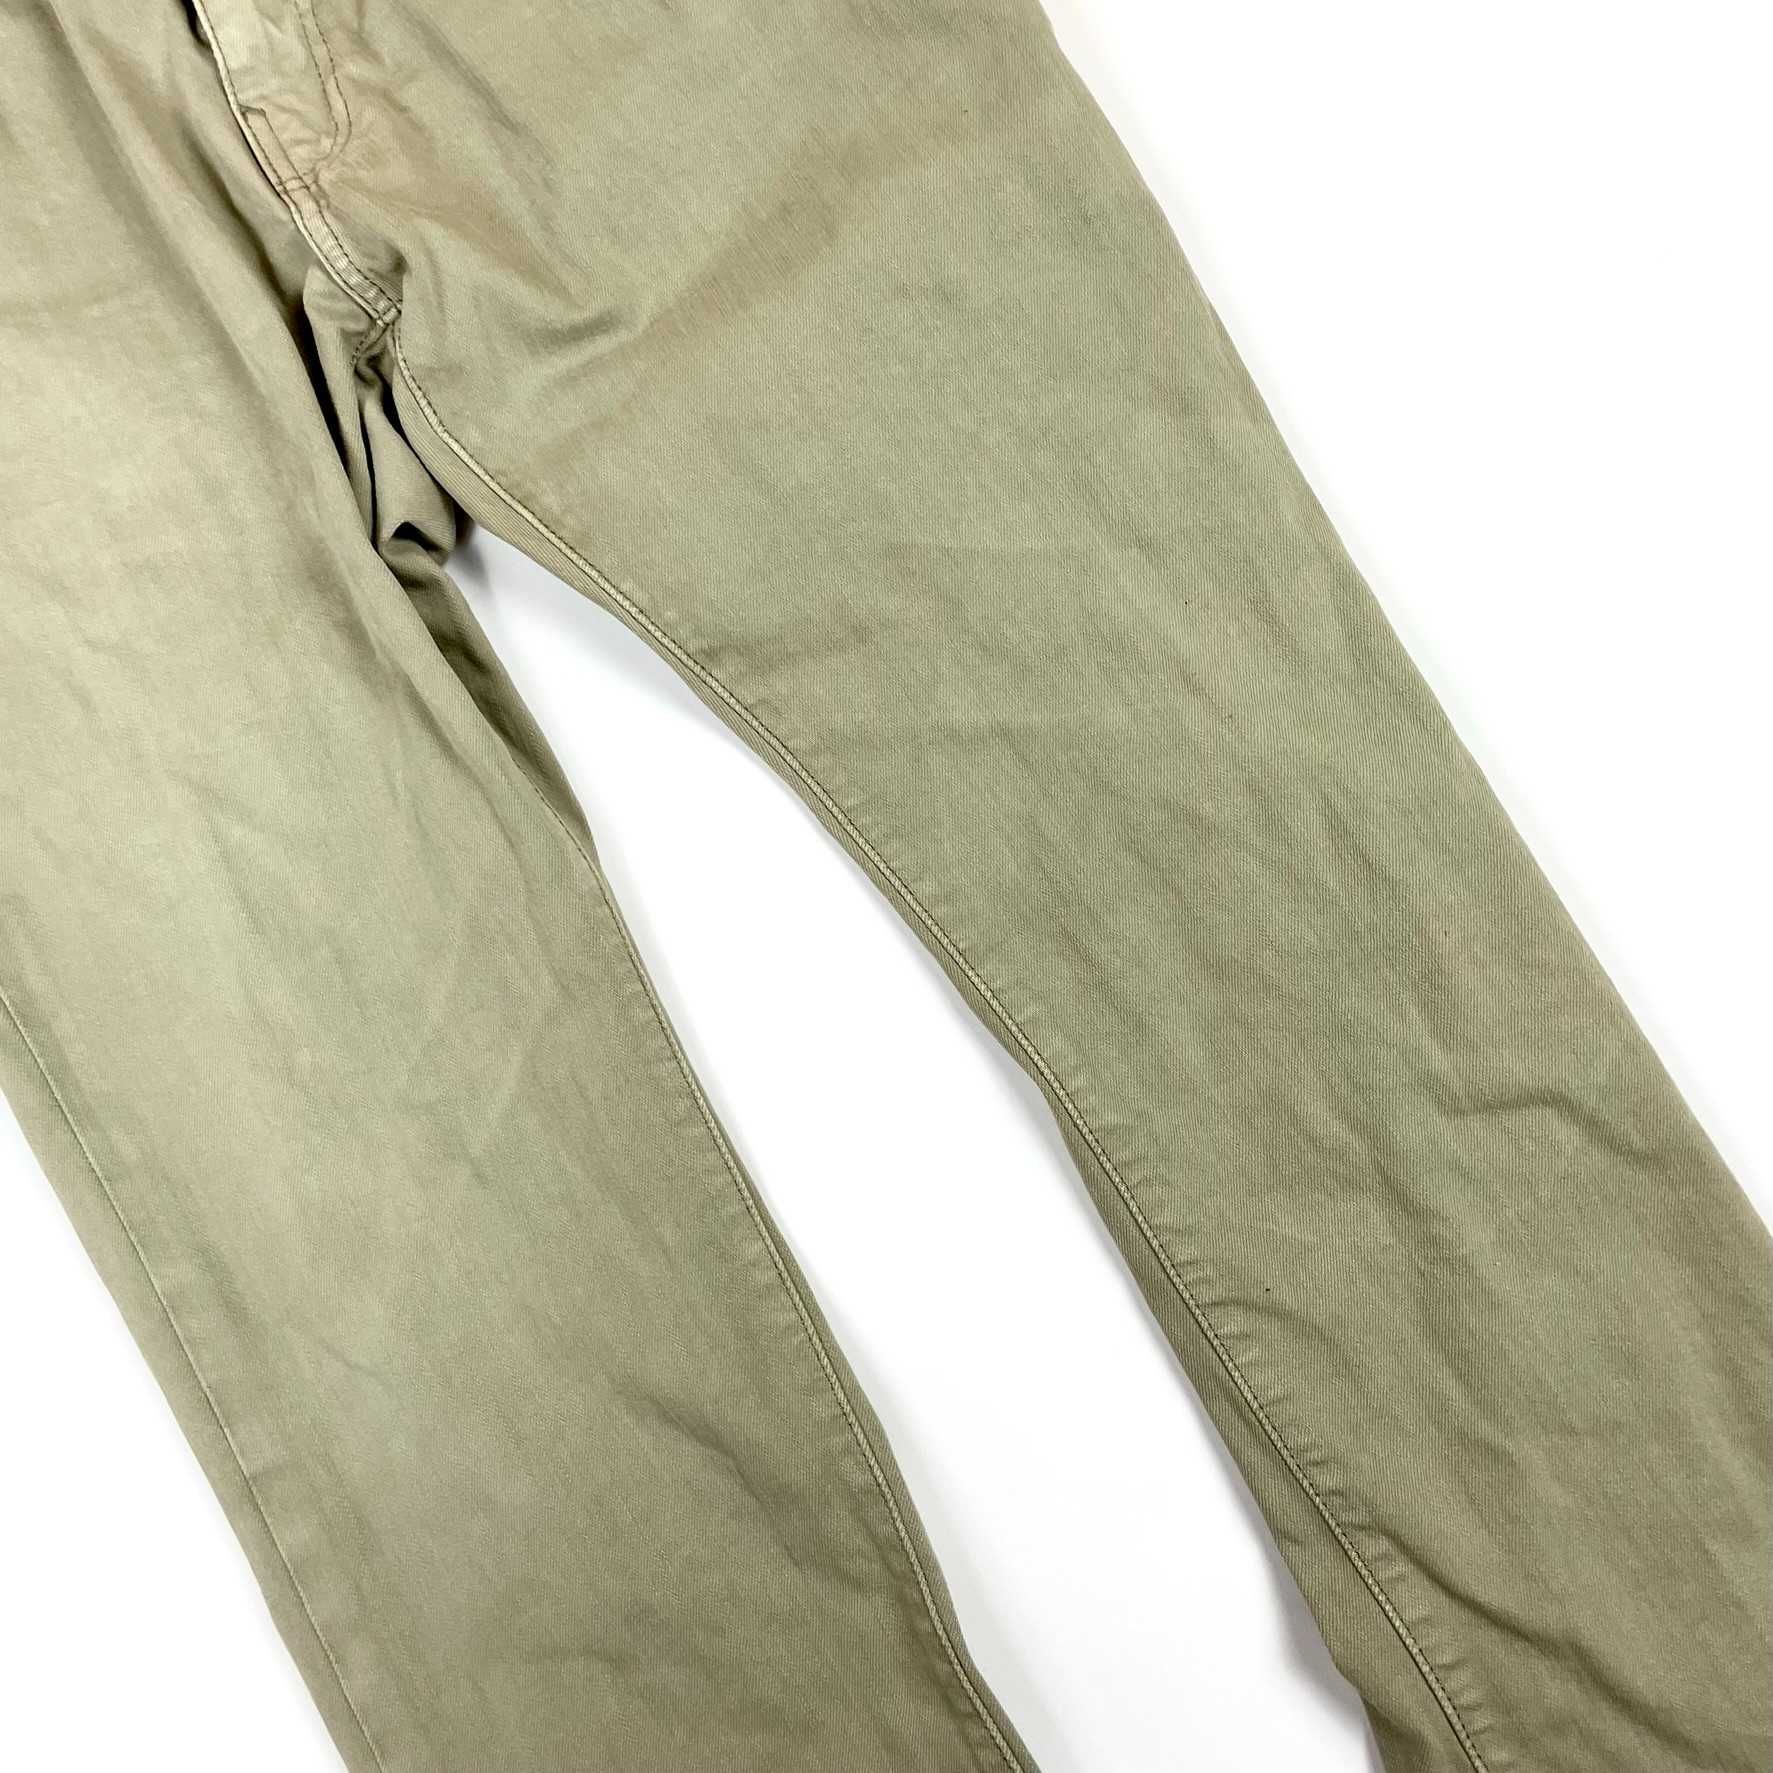 Grant 505 American Classic Jeans spodnie jeansowe vintage denim